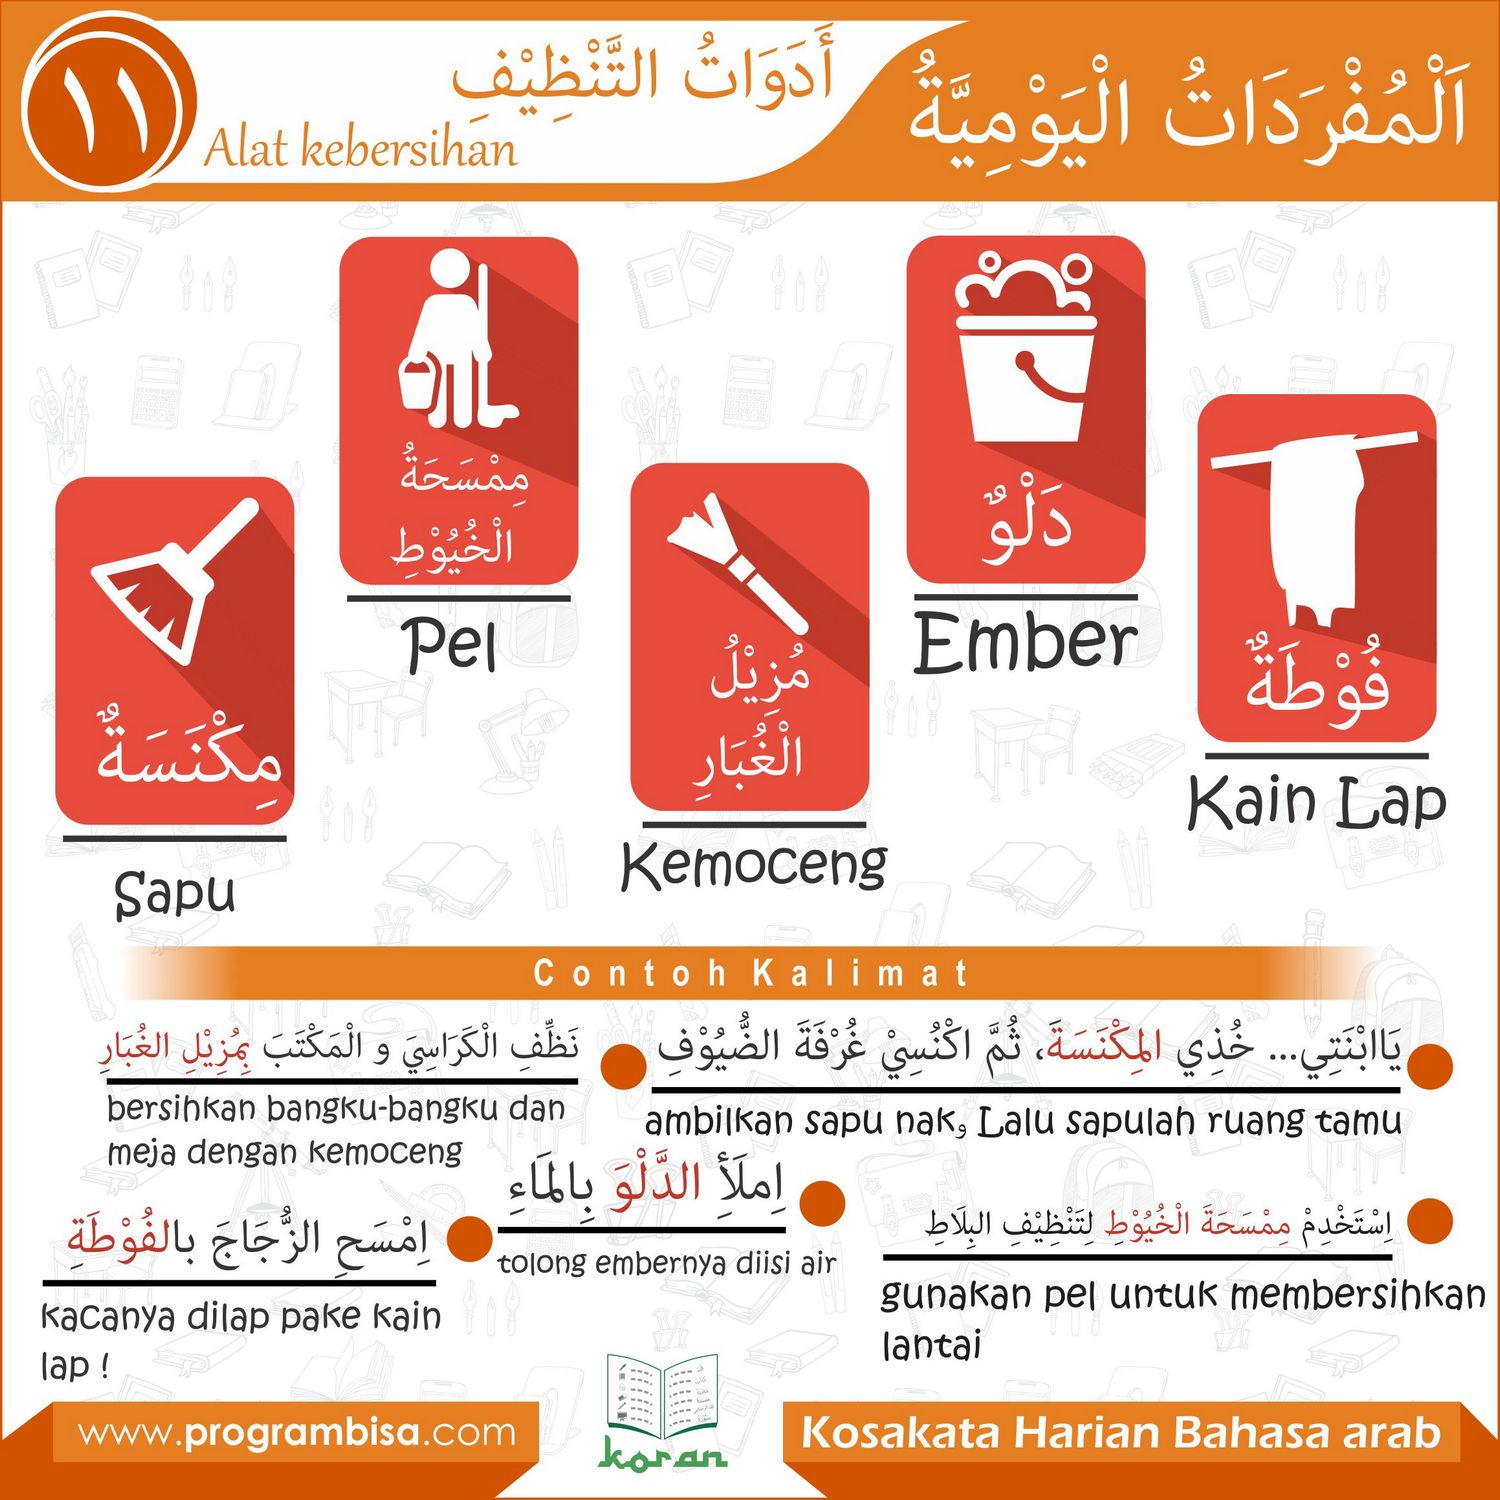 Penyapu dalam bahasa arab